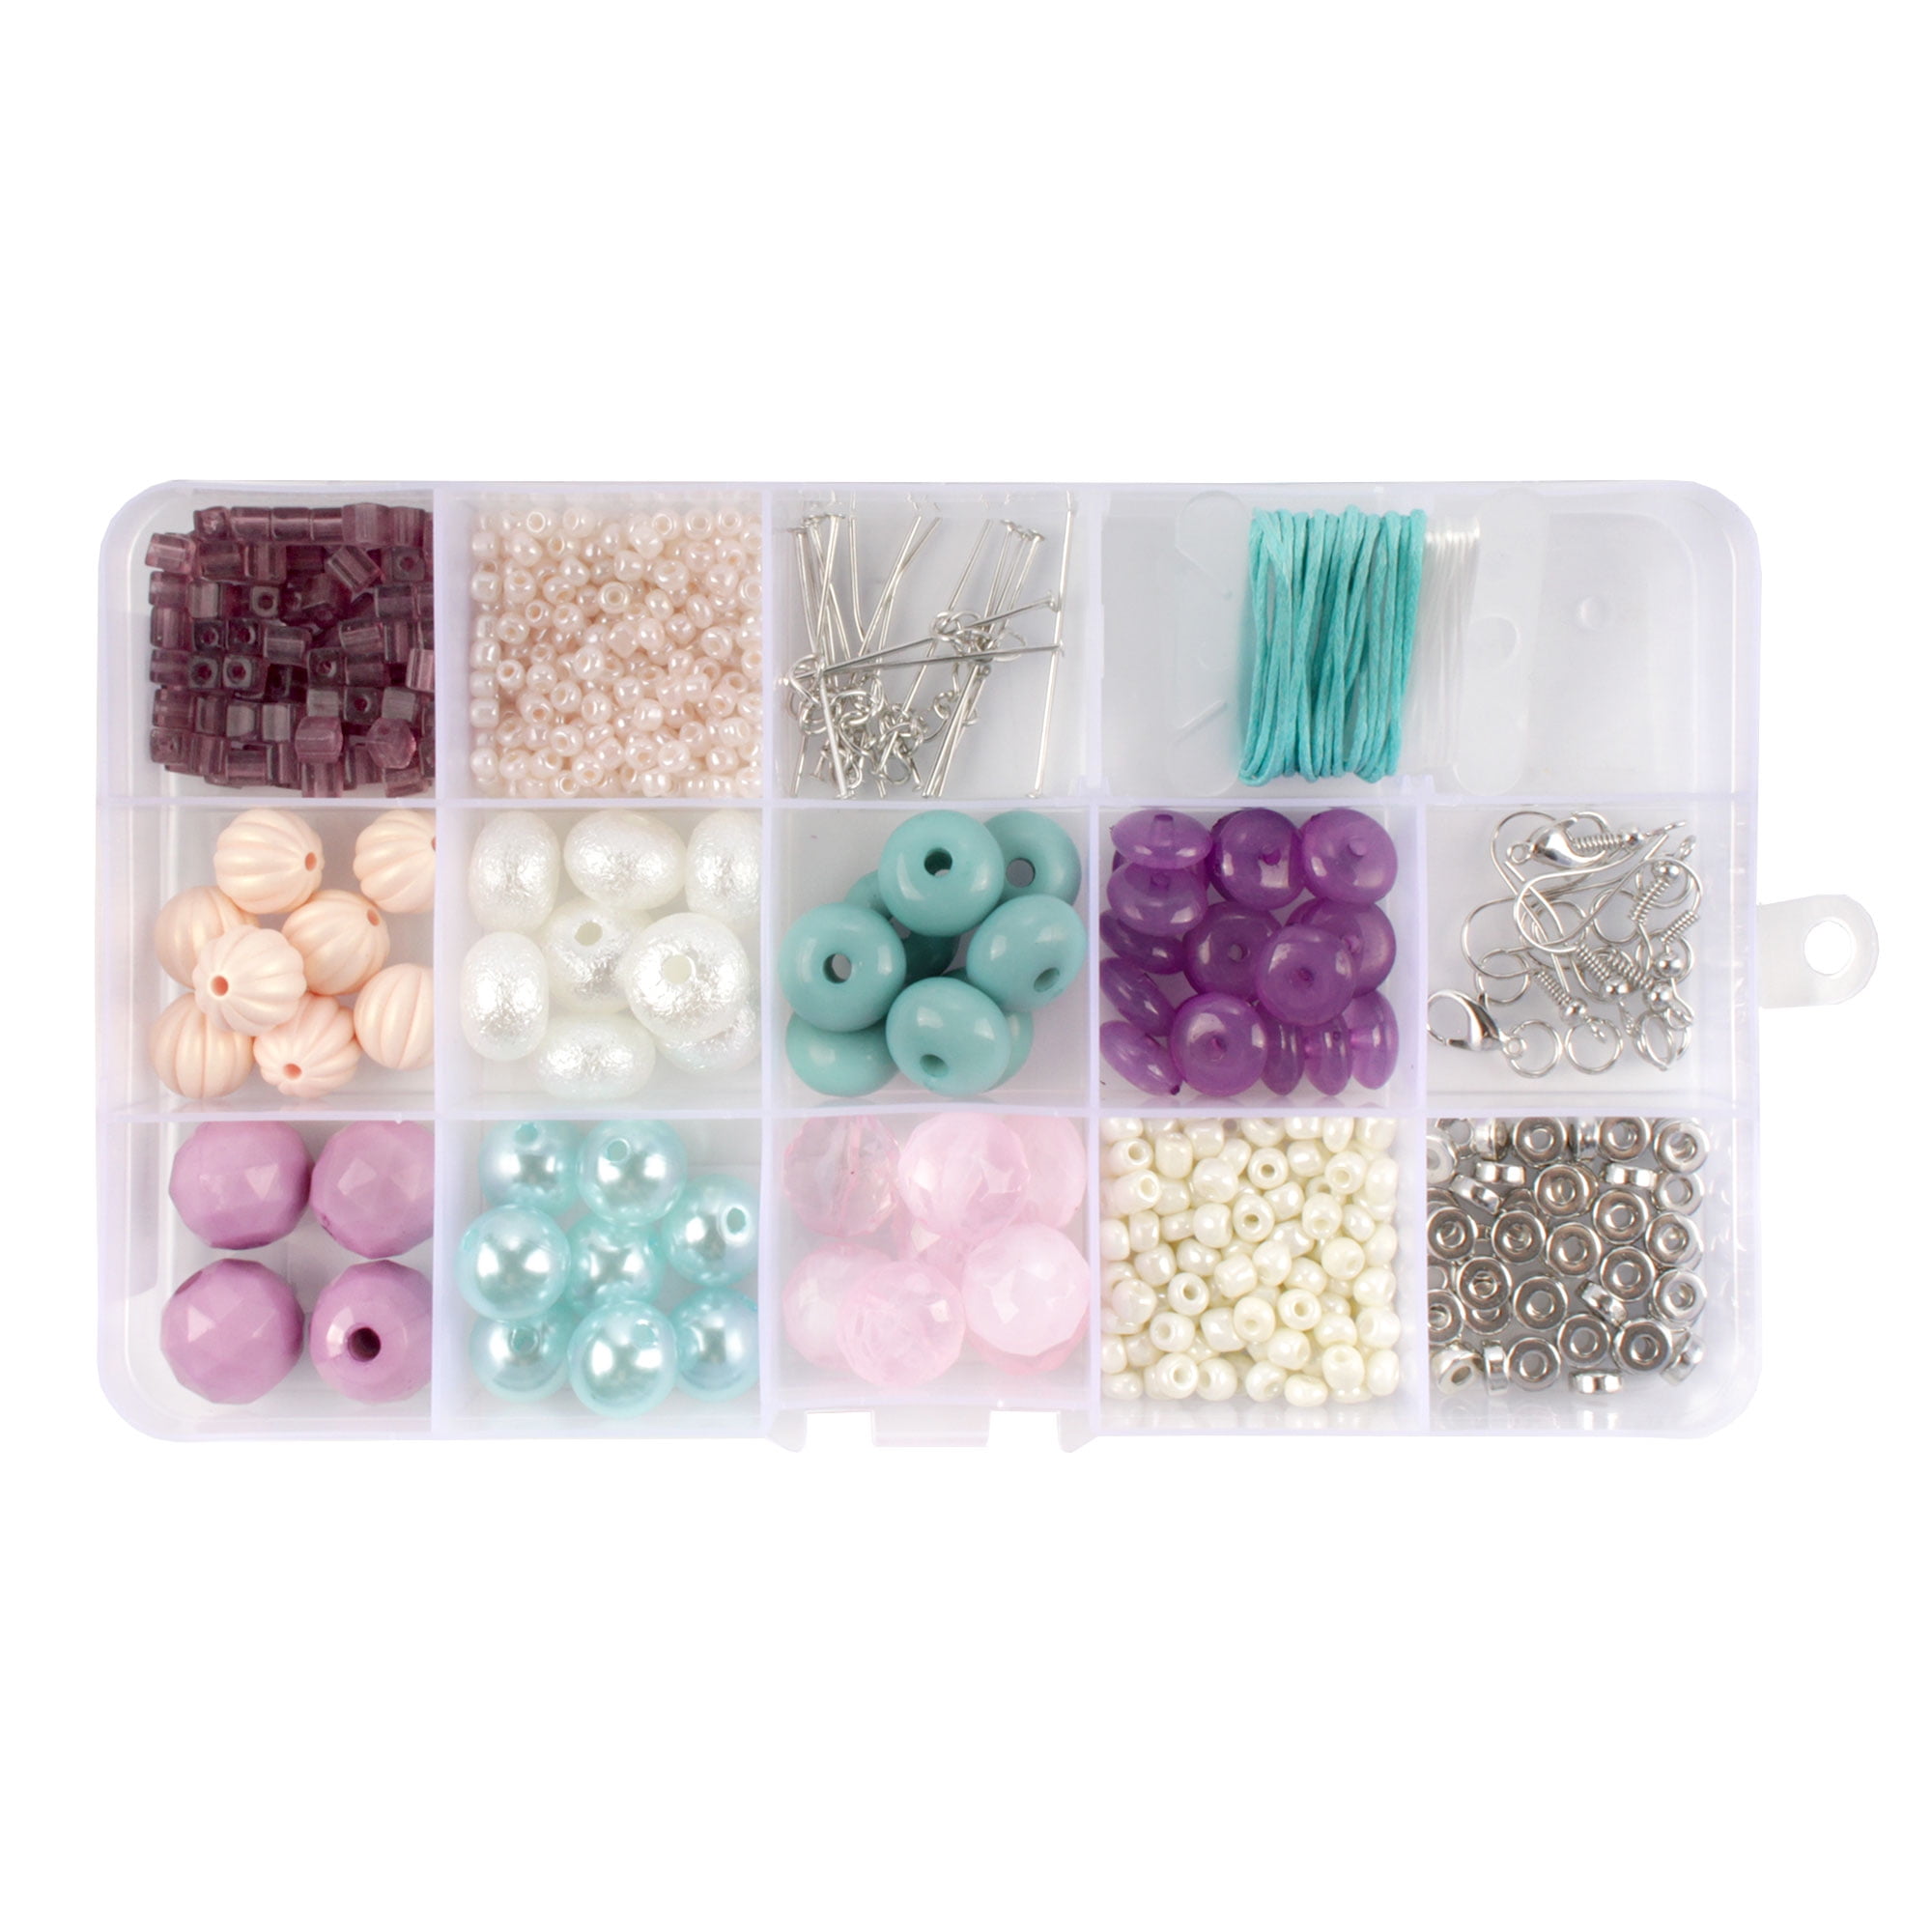 Bead Kits for Jewerly Making - 600pcs Bead Craft Set - DIY